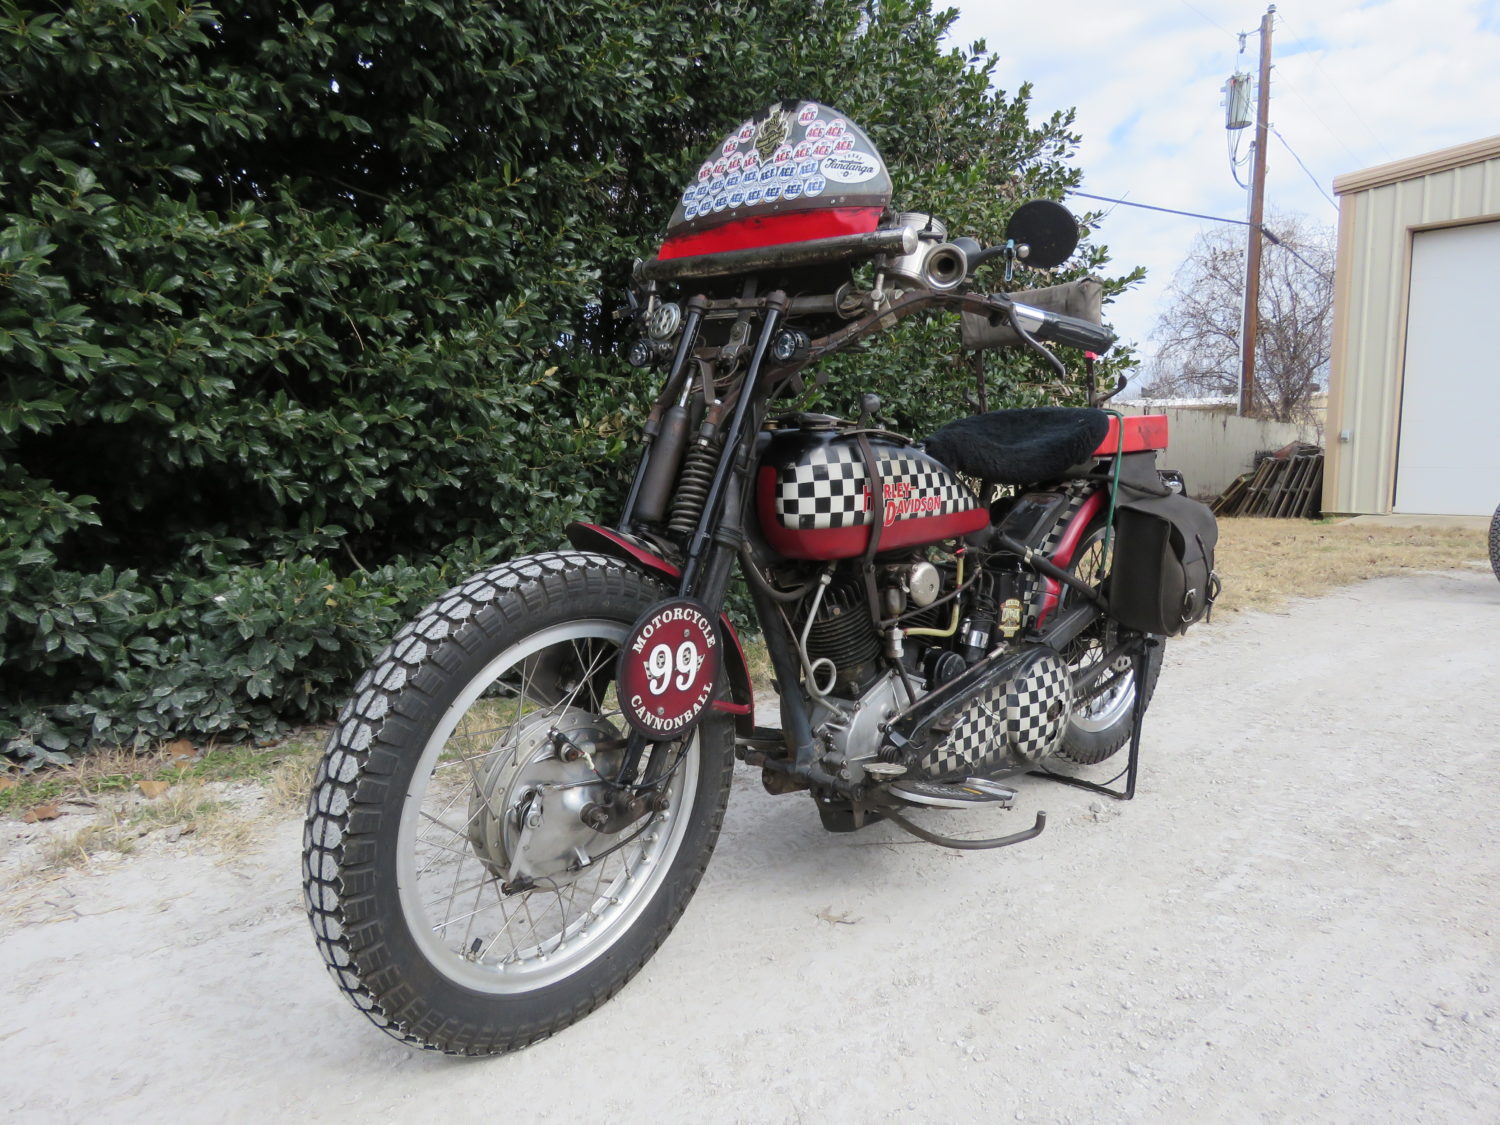 Vintage Harley Davidson Motorcycles & Parts Auction- The Jon Neuman Vintage Harley Davidson Collection  - image 1